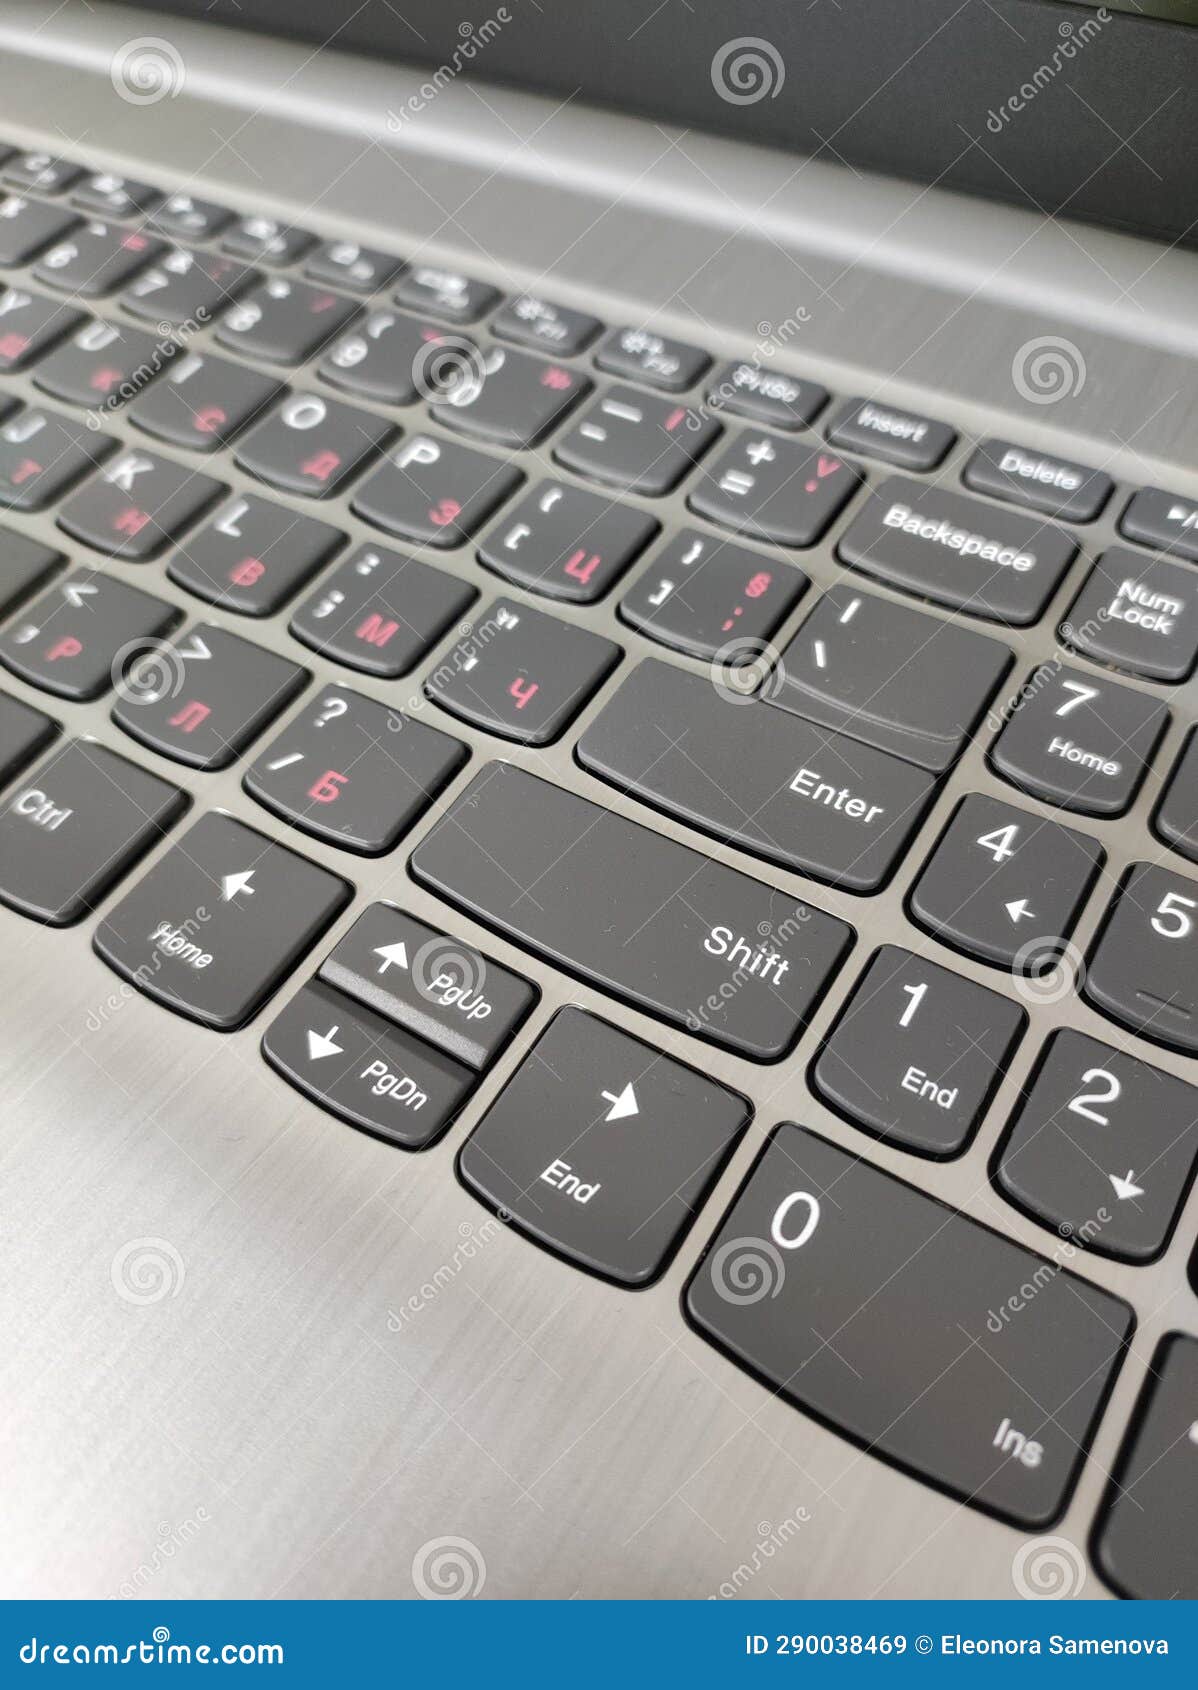 laptop keyoard closeup